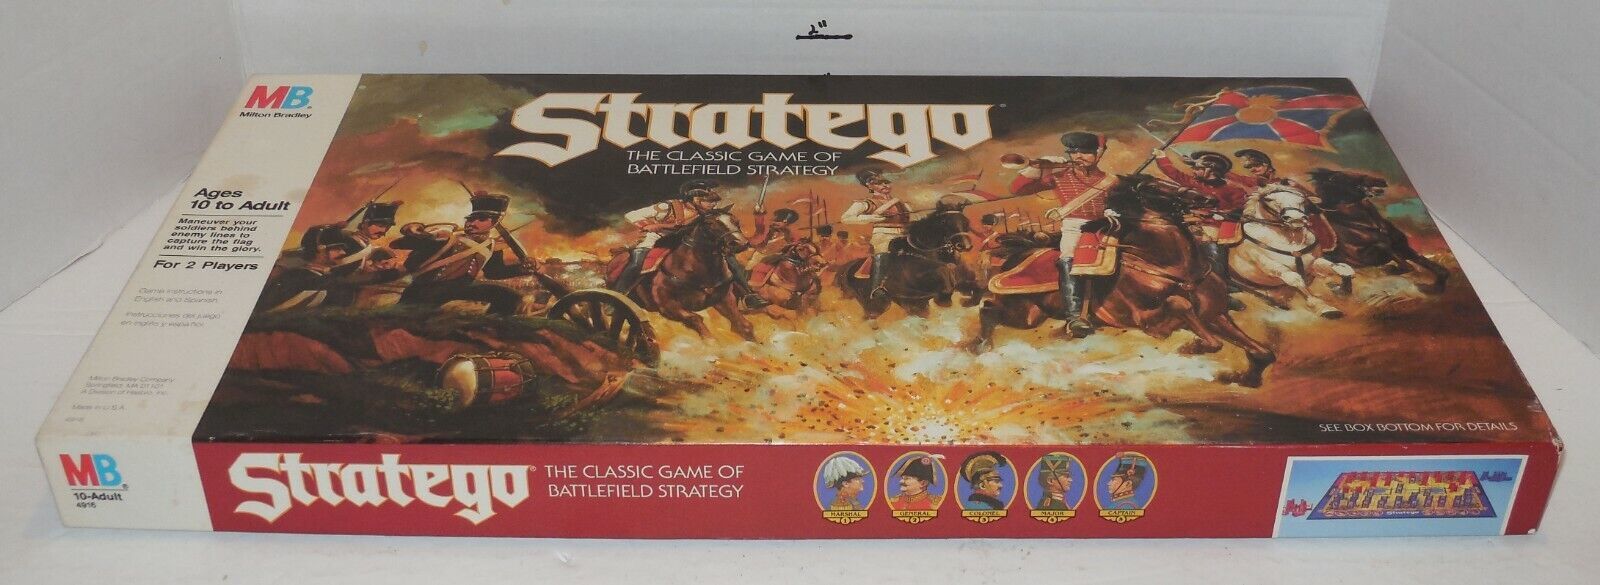 Vintage 1986 STRATEGO Milton Bradley MB Board Game Strategy Military Battlefield - $48.22